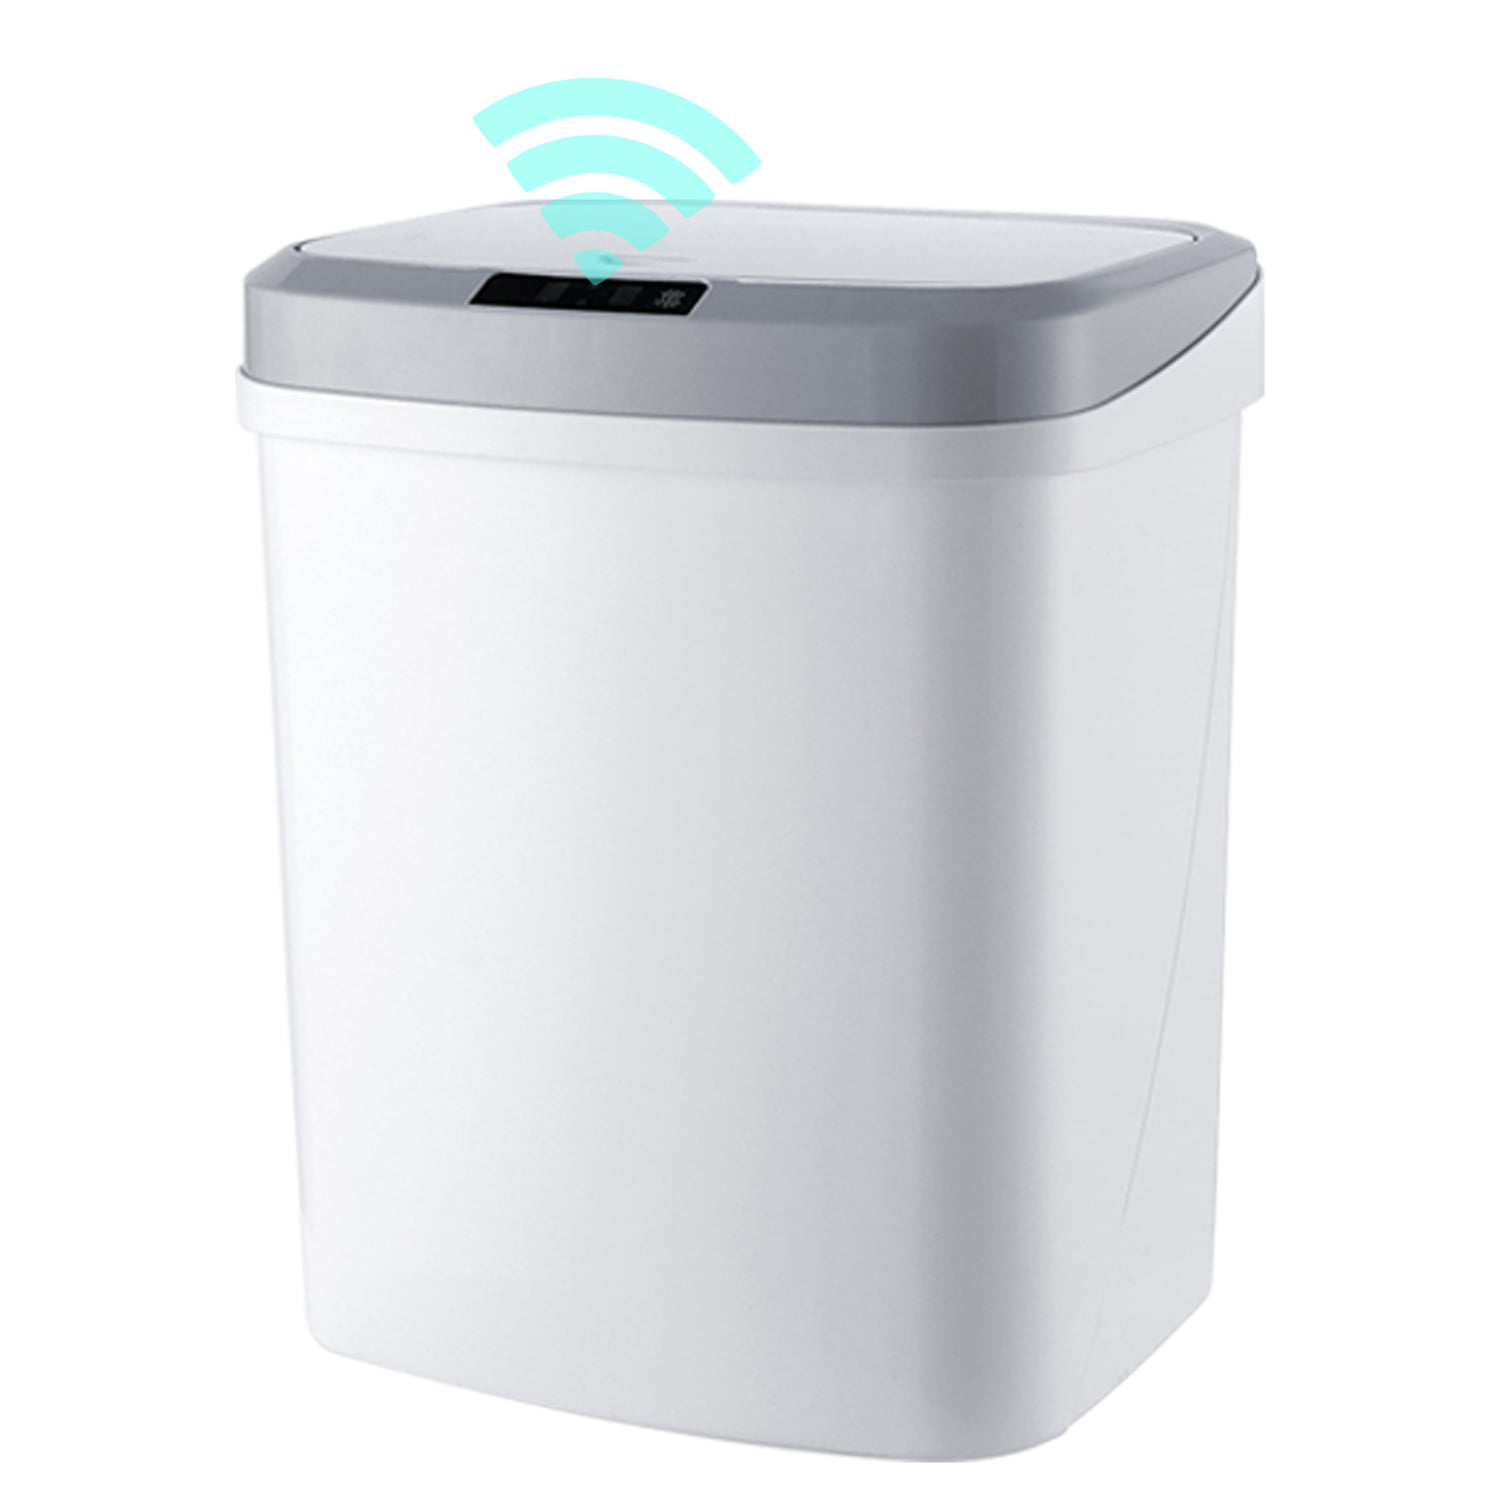 Details about   Smart Trash Can Automatic LID SENSOR 